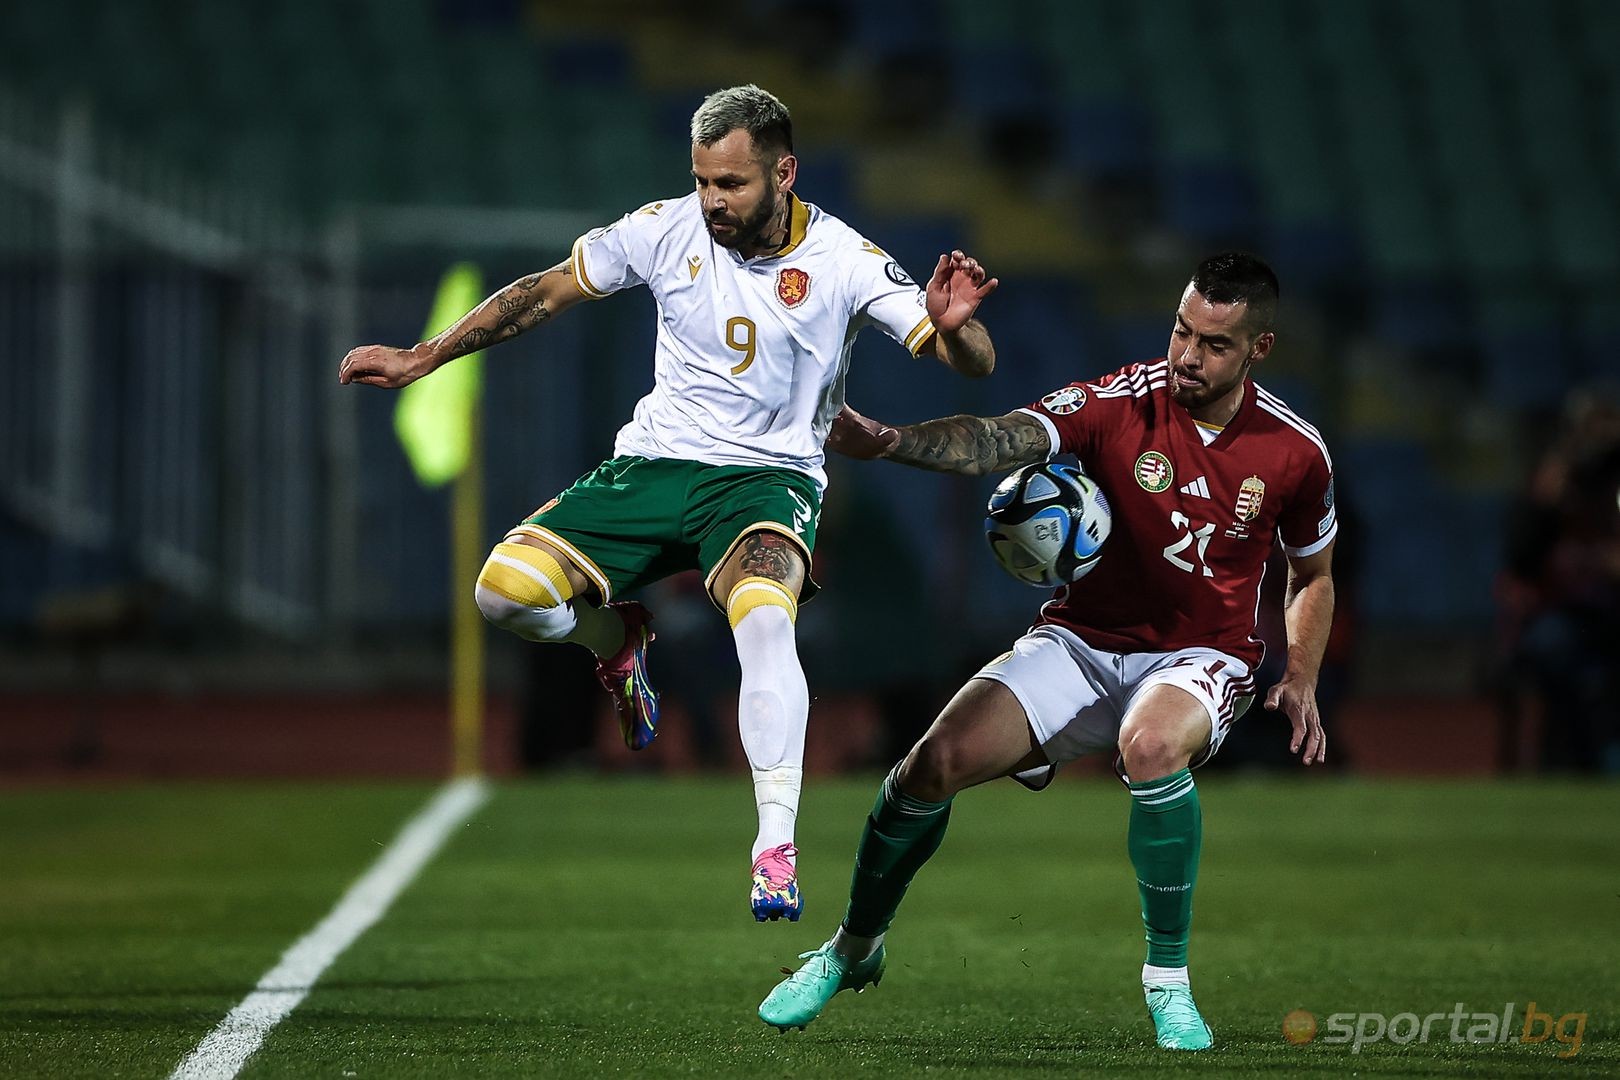 Автогол в последните секунди ни лиши от победата срещу Унгария
